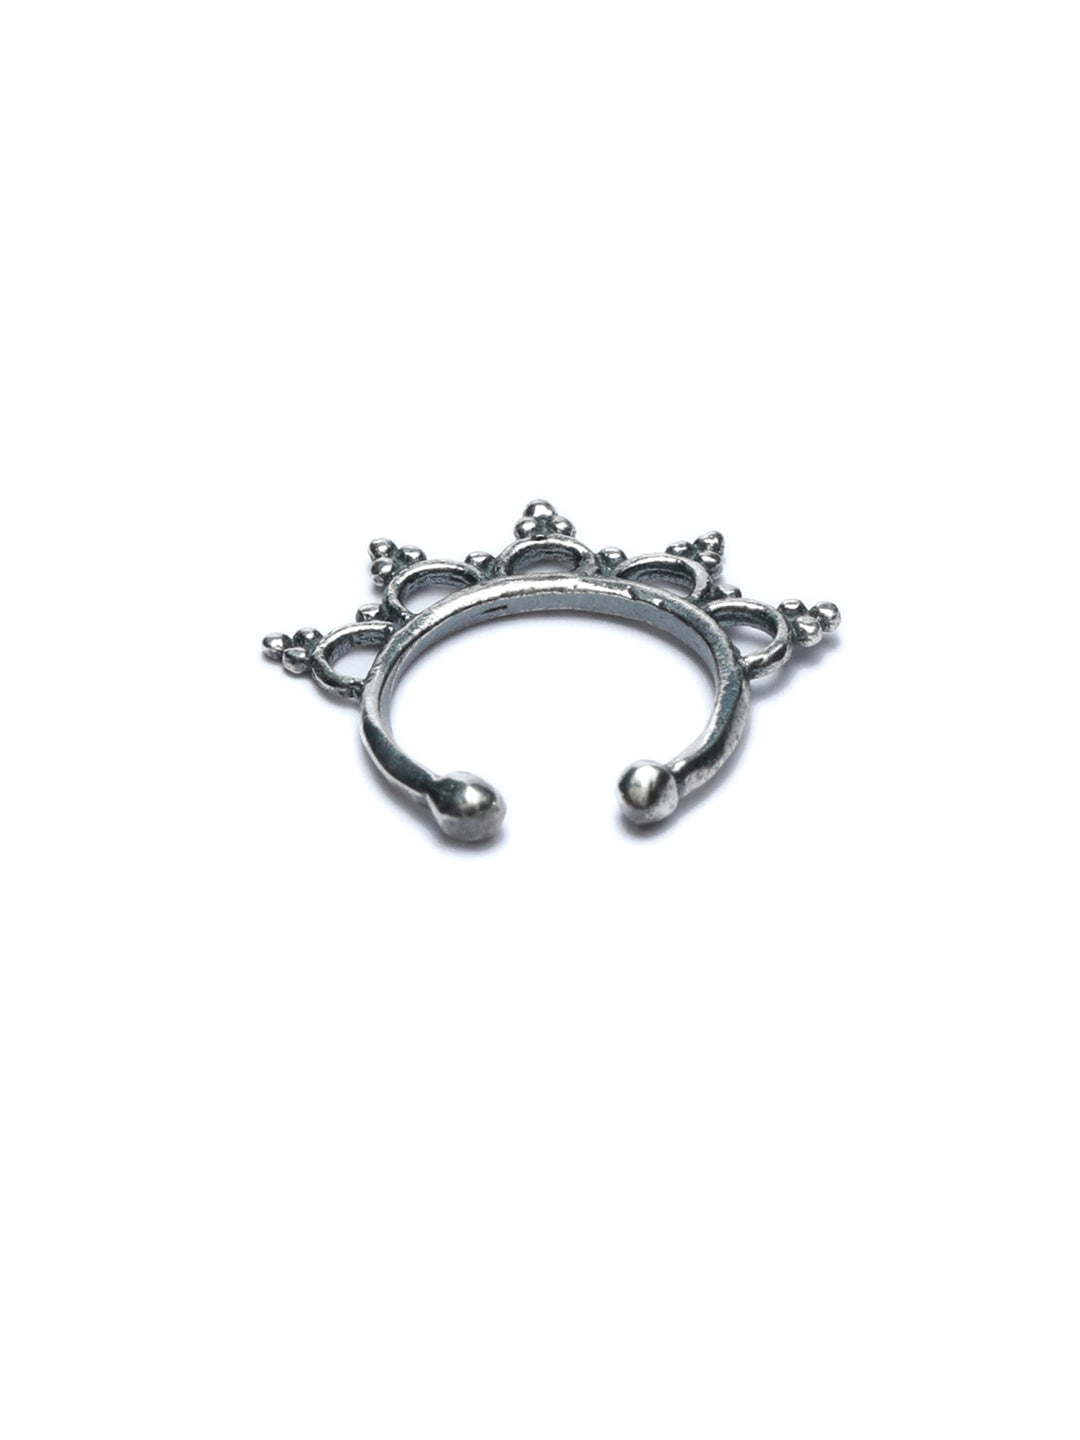 Oxidised Silver Vintage Septum Nose Ring